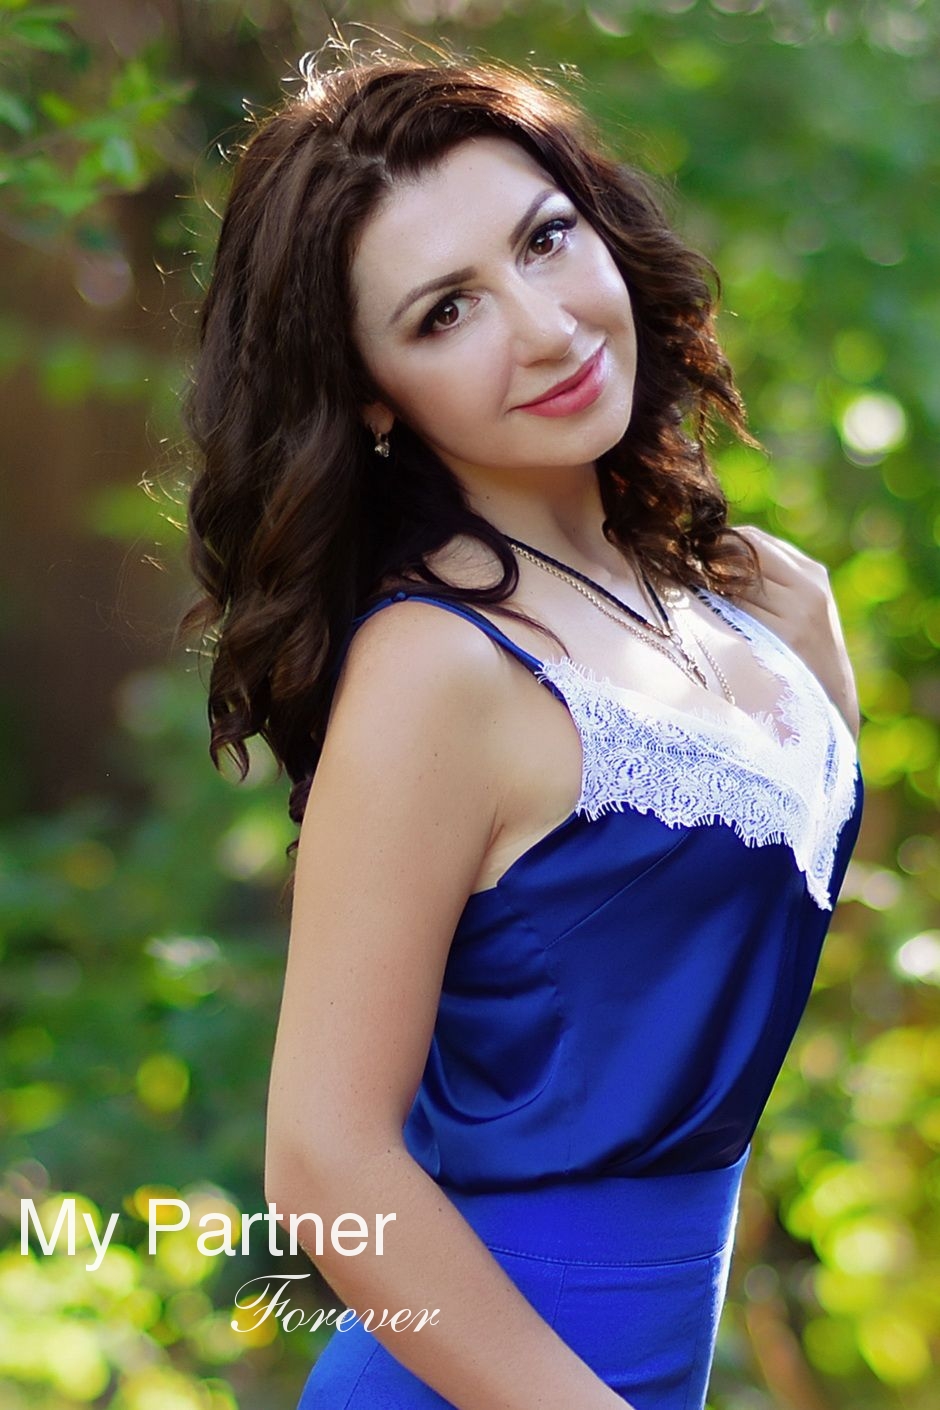 Pretty Woman from Ukraine - Vera from Kharkov, Ukraine